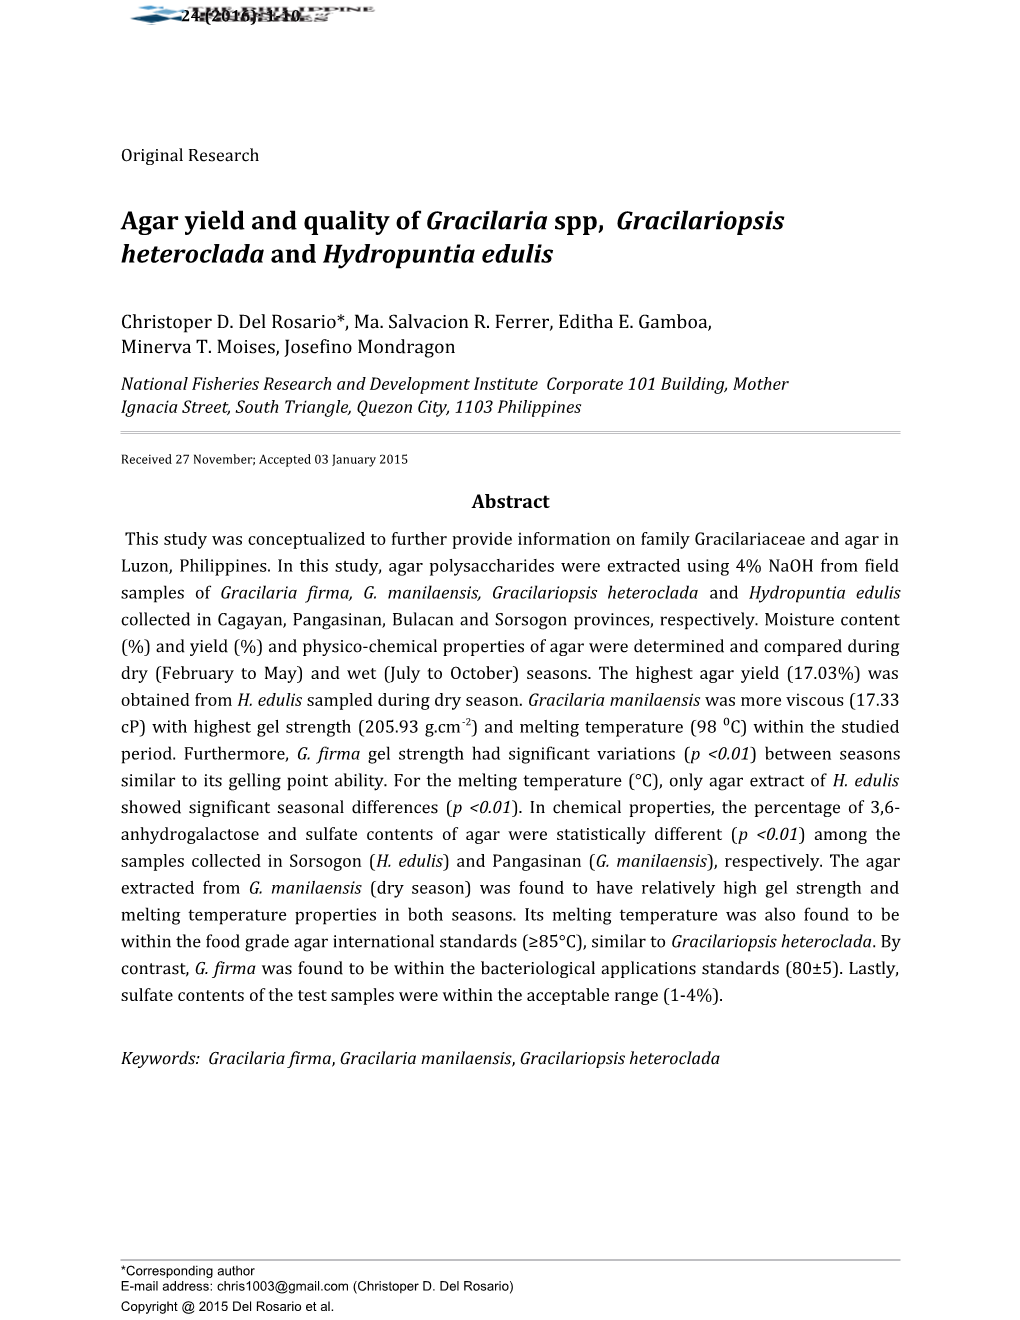 Agar Yield and Quality of Gracilariaspp, Gracilariopsis Heteroclada and Hydropuntiaedulis